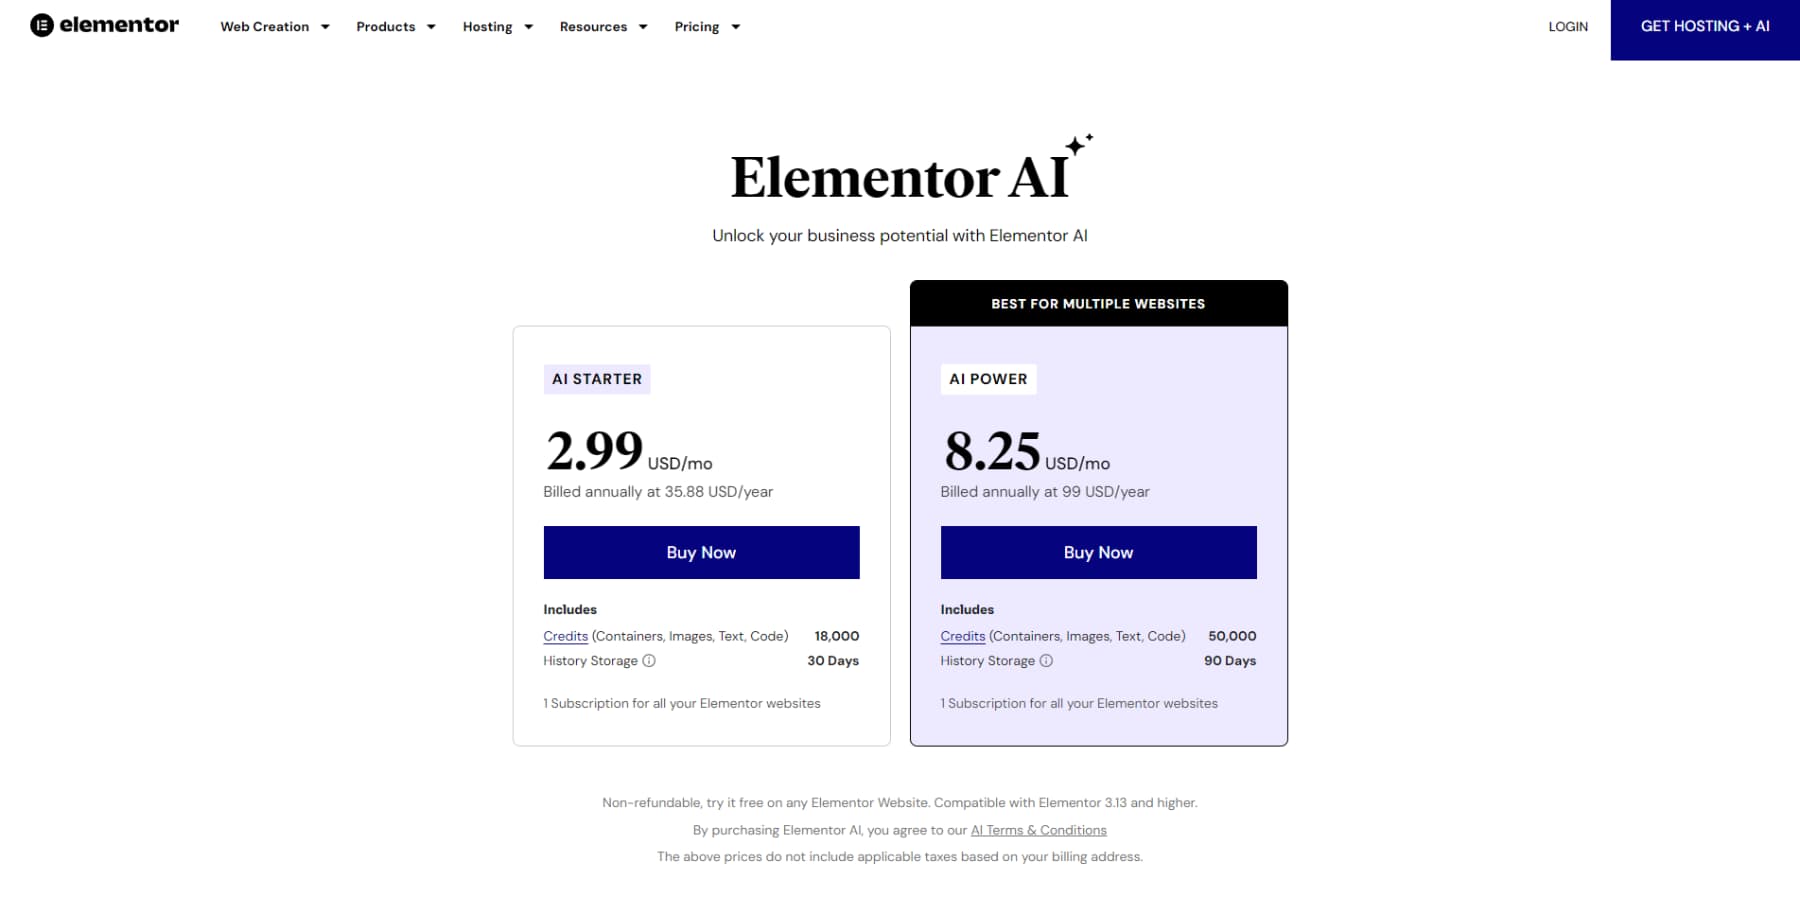 A screenshot of Elementor AI's pricing